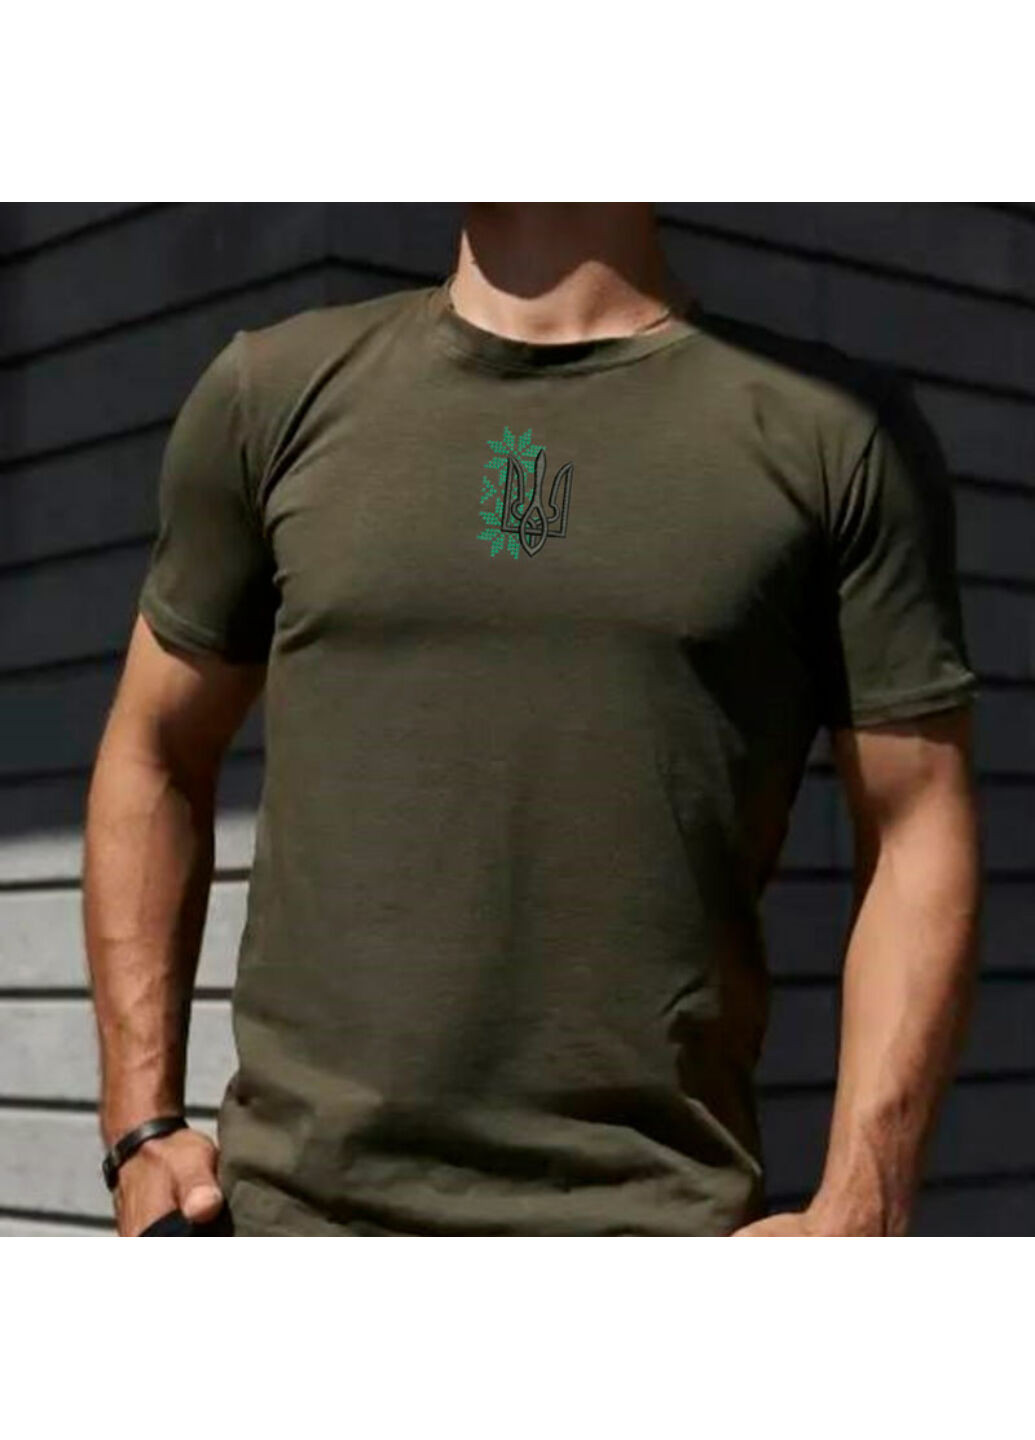 Хаки (оливковая) футболка з вишивкою тризуба 01-2 мужская хаки m No Brand